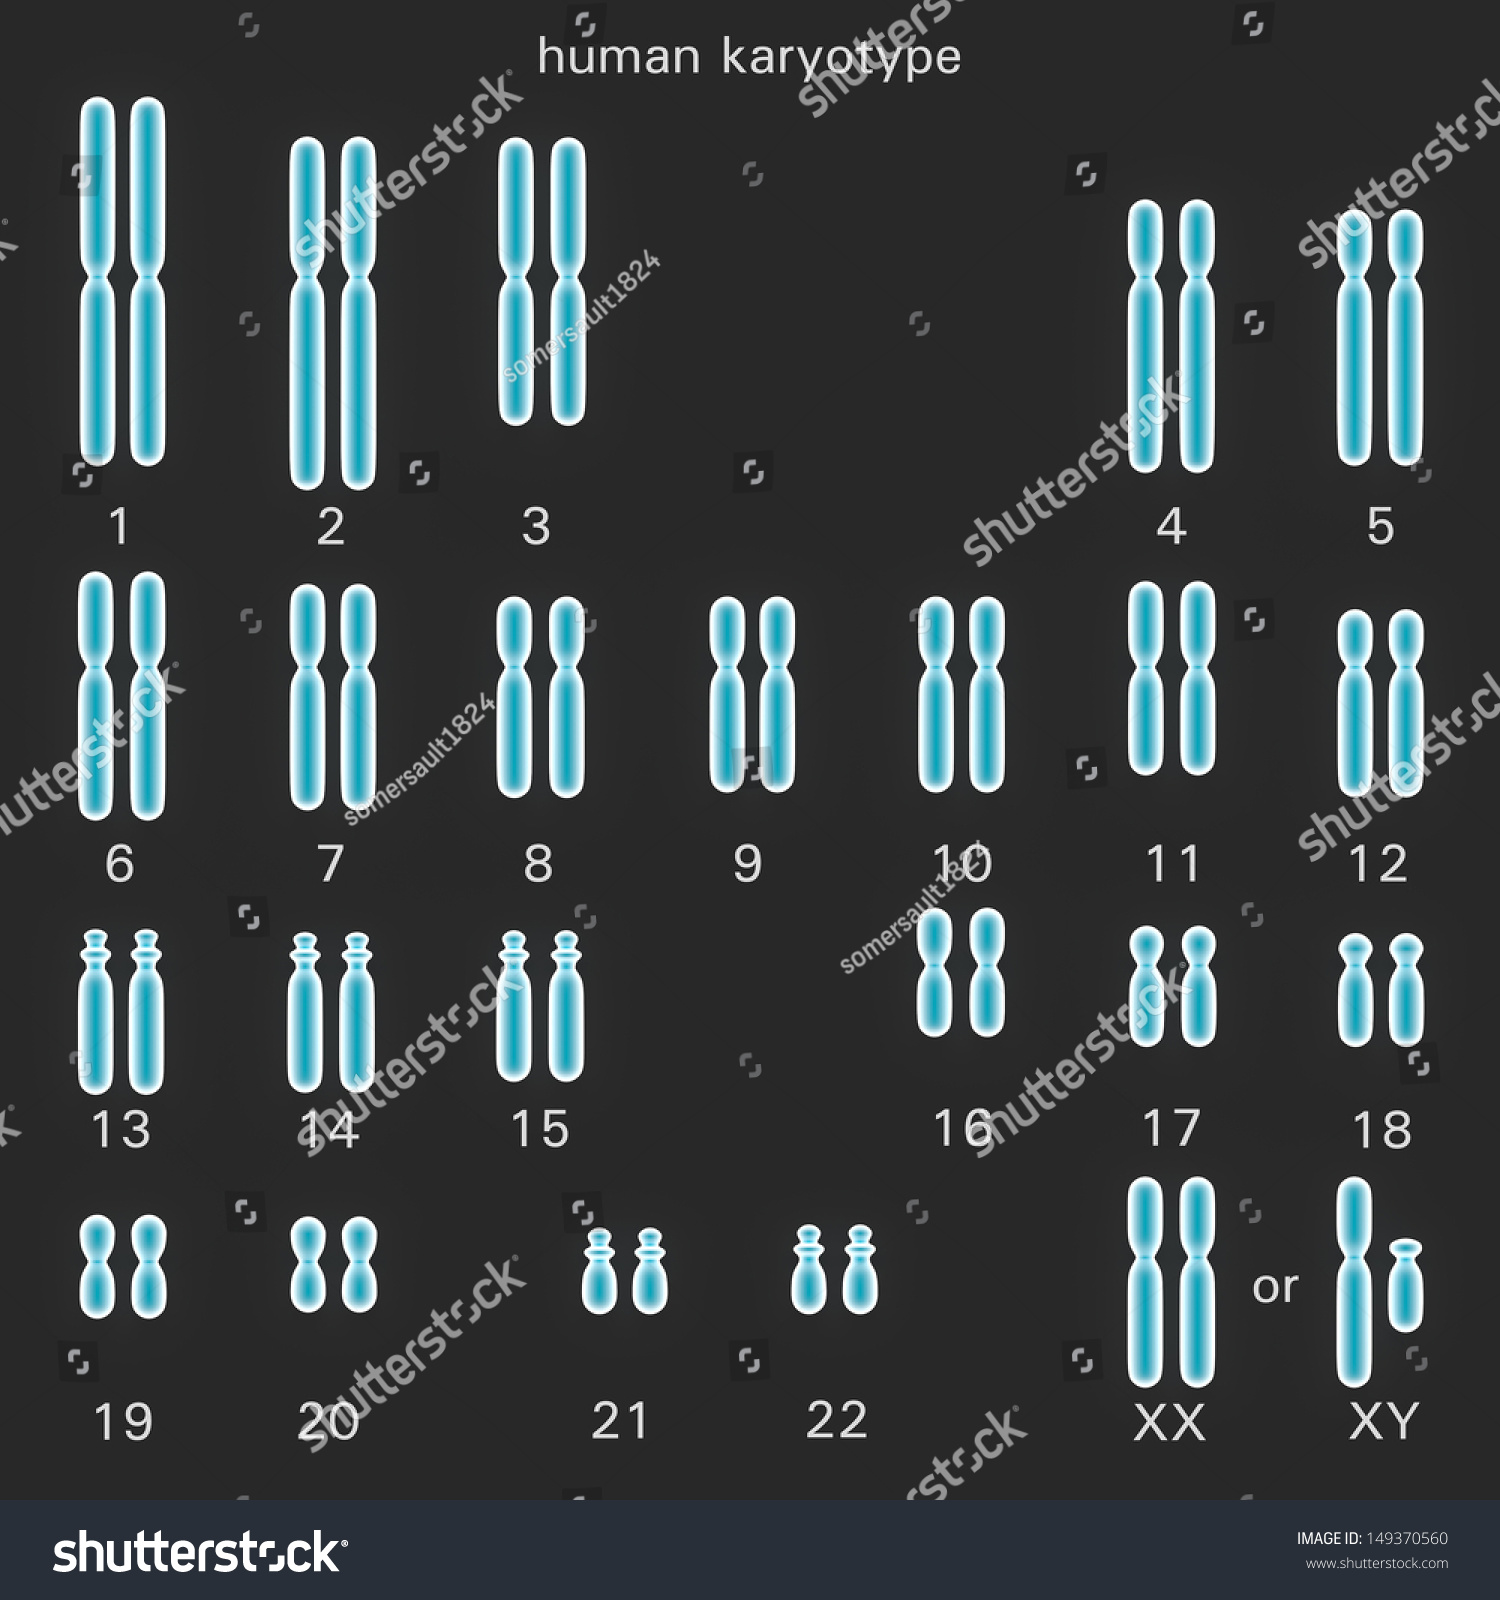 Normal Human Karyotype Which Diploid Pairing Stock Illustration 149370560 Shutterstock 0947